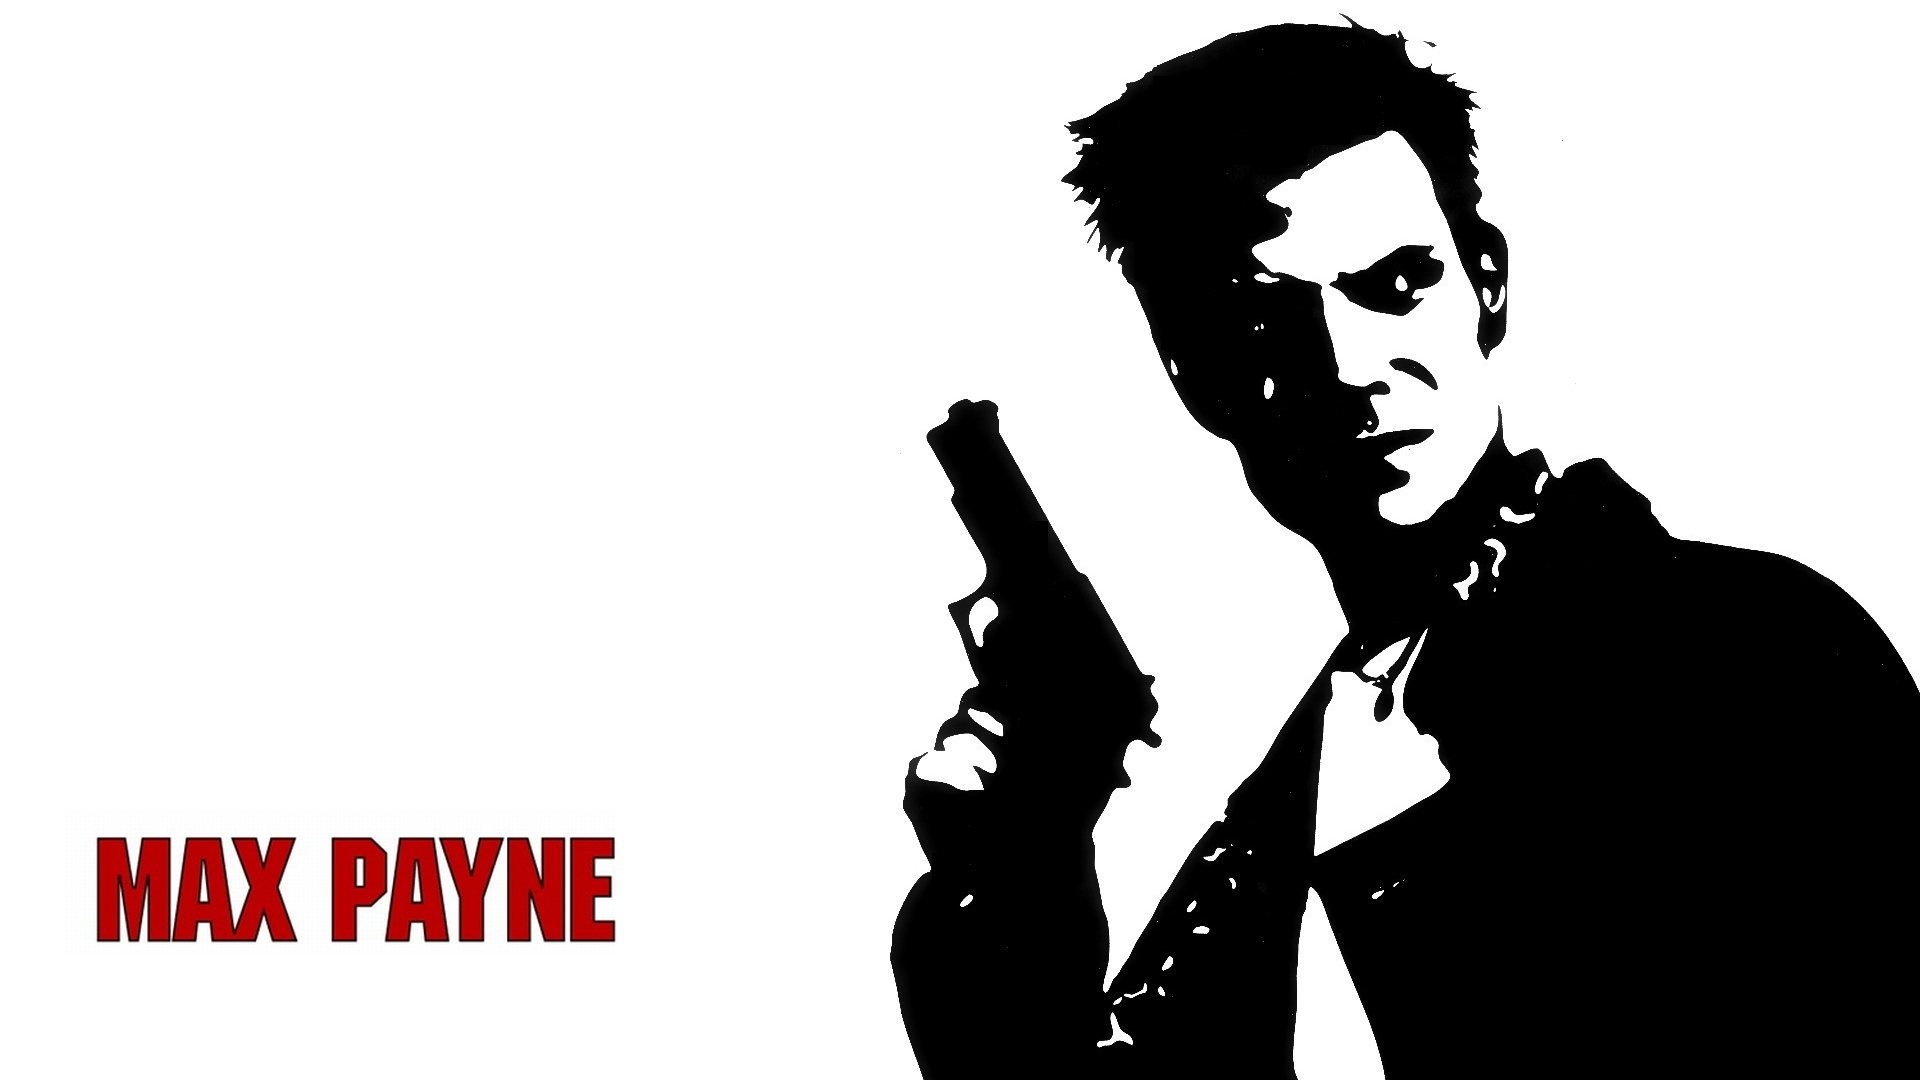 Max Payne Backgrounds, Compatible - PC, Mobile, Gadgets| 1920x1080 px